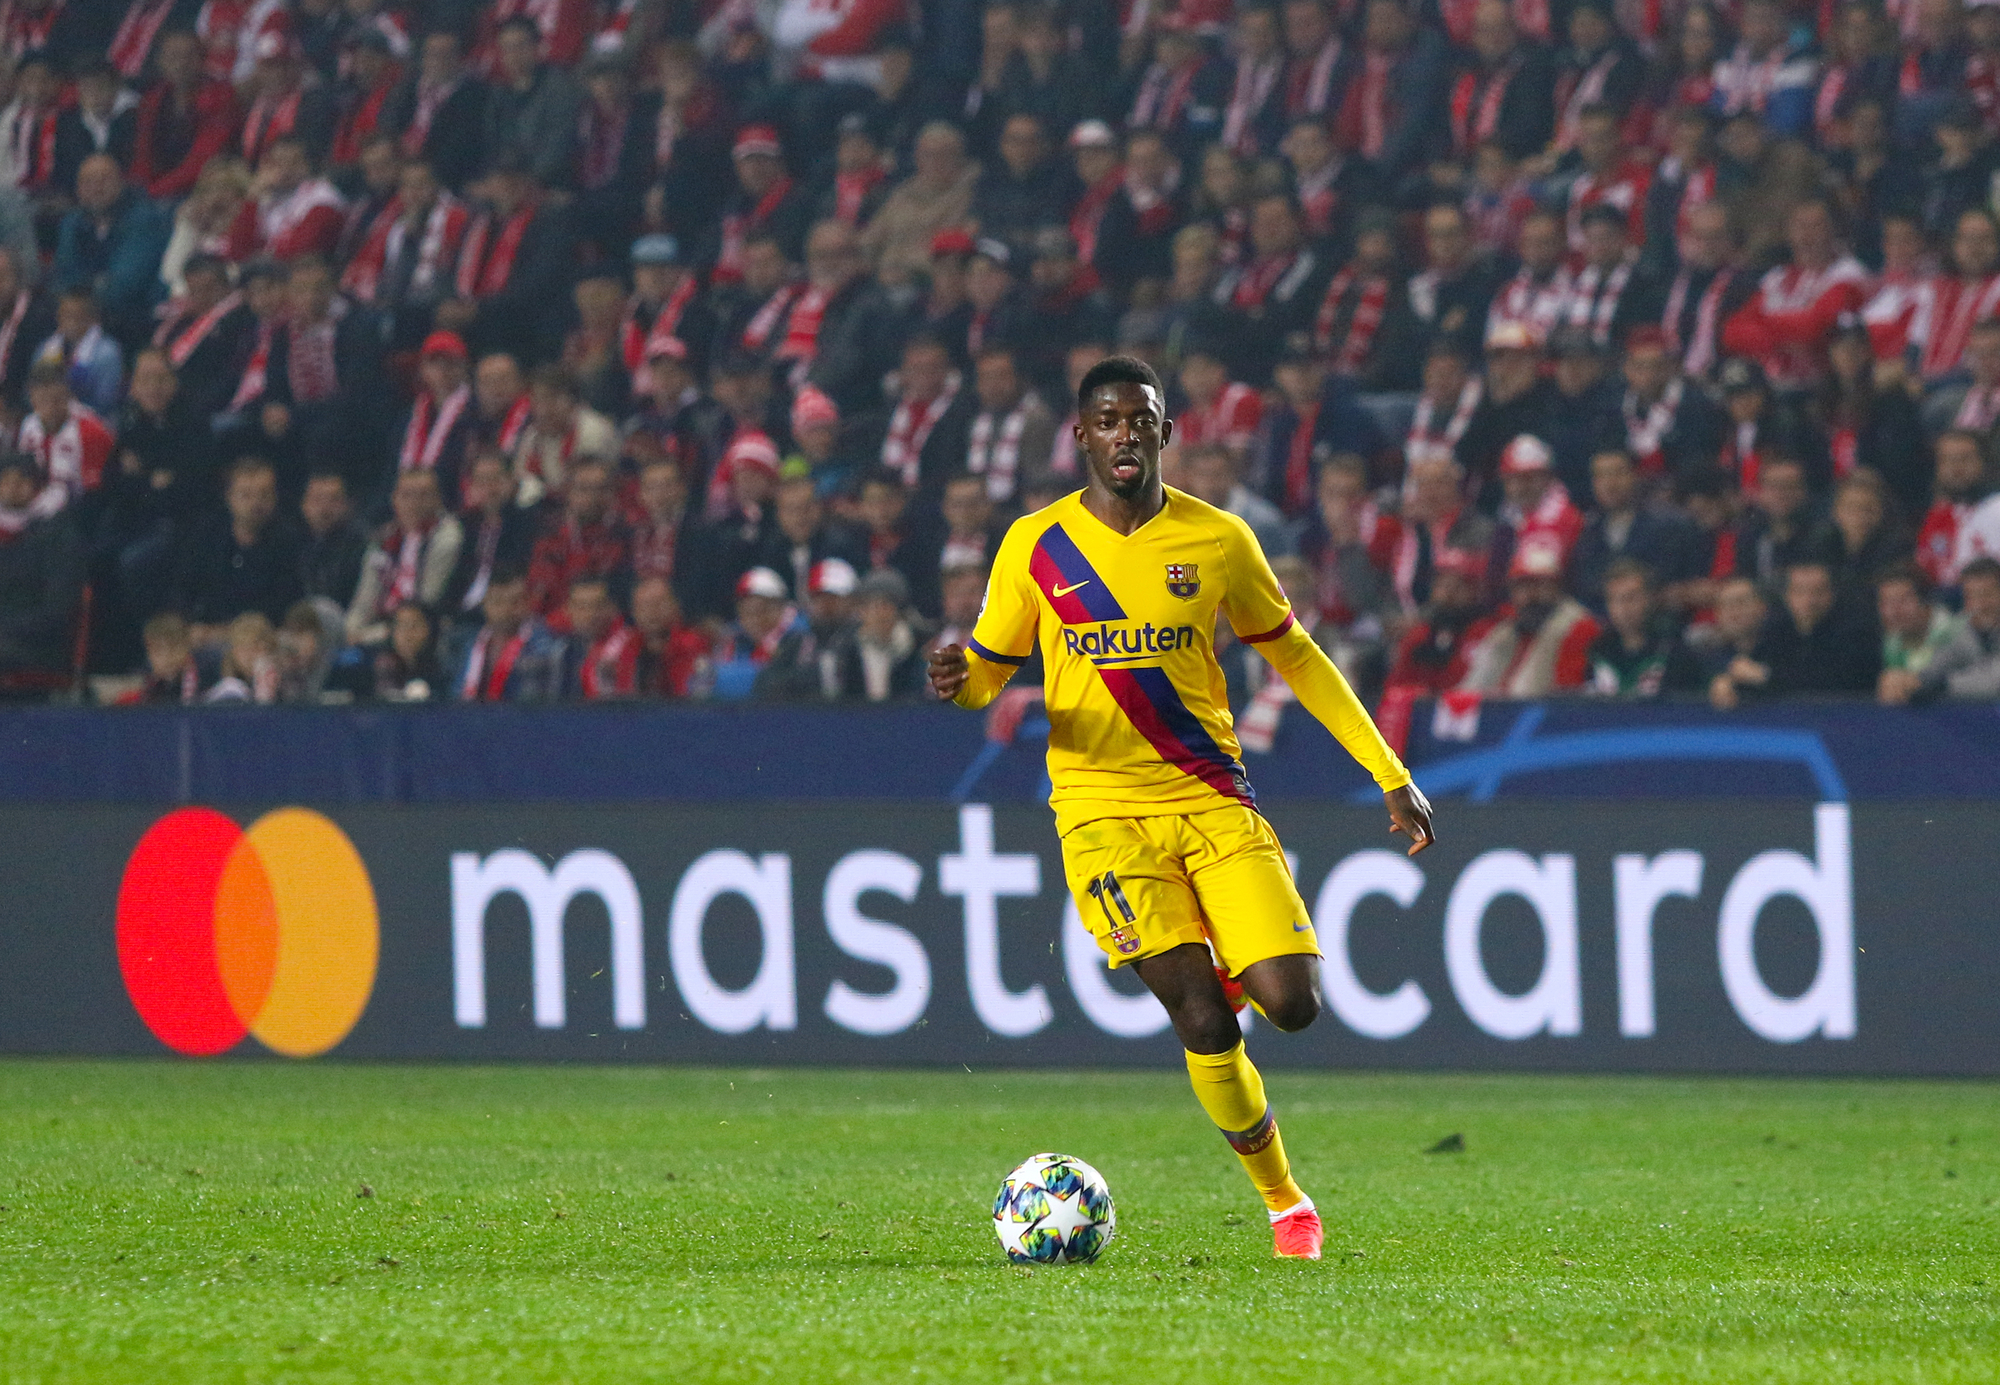 Dembélé se sincera sobre su etapa en el Barça